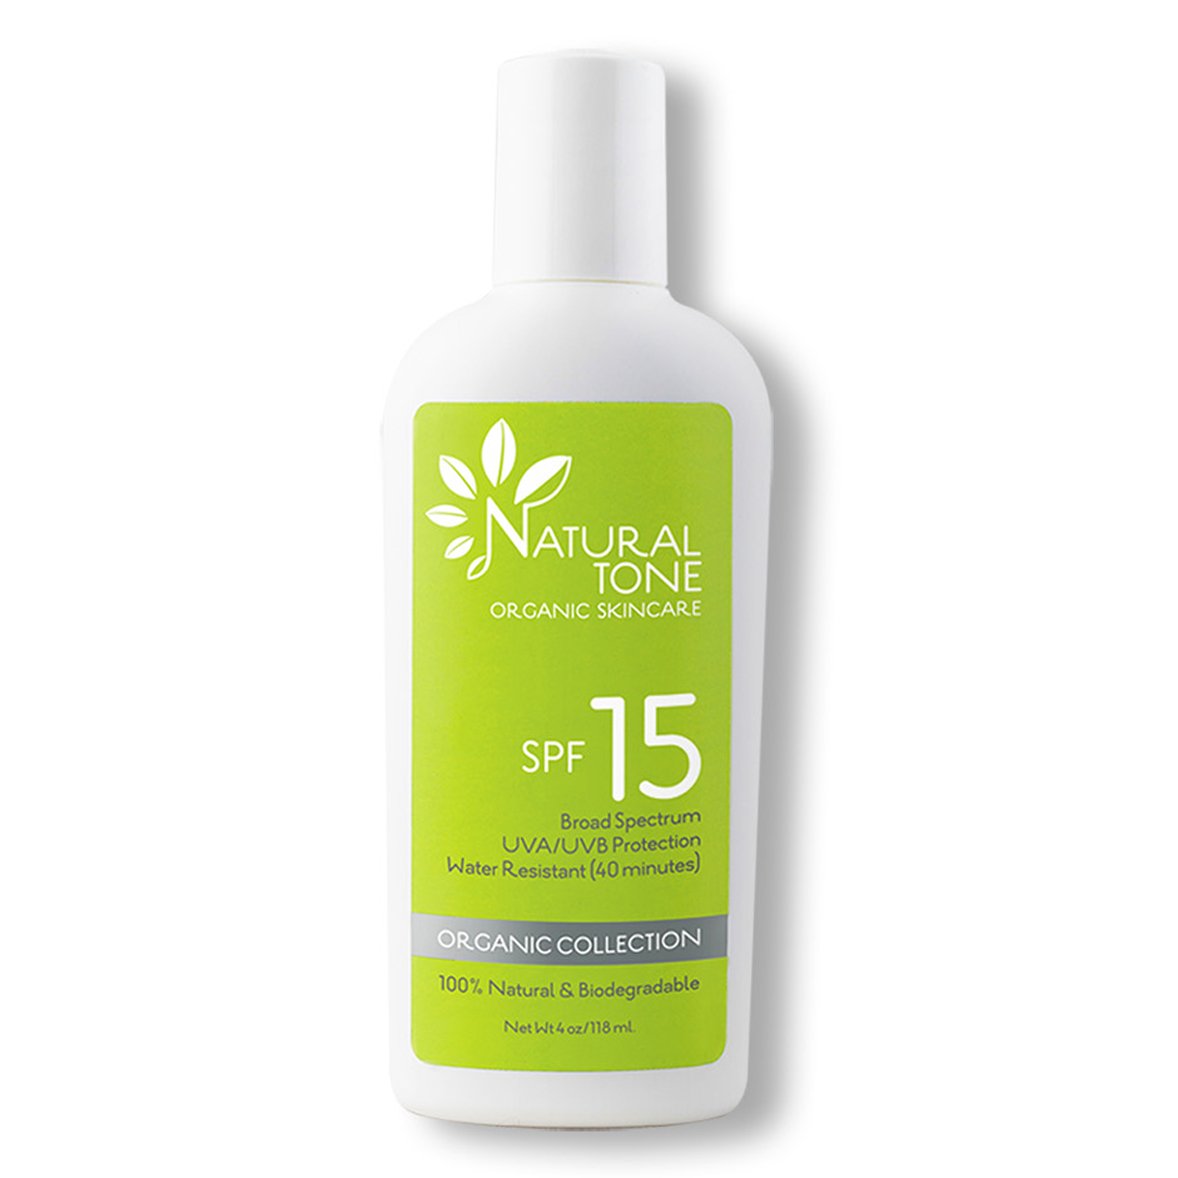 SPF 15 Natural Sunscreen - Natural Tone Organic Skincare